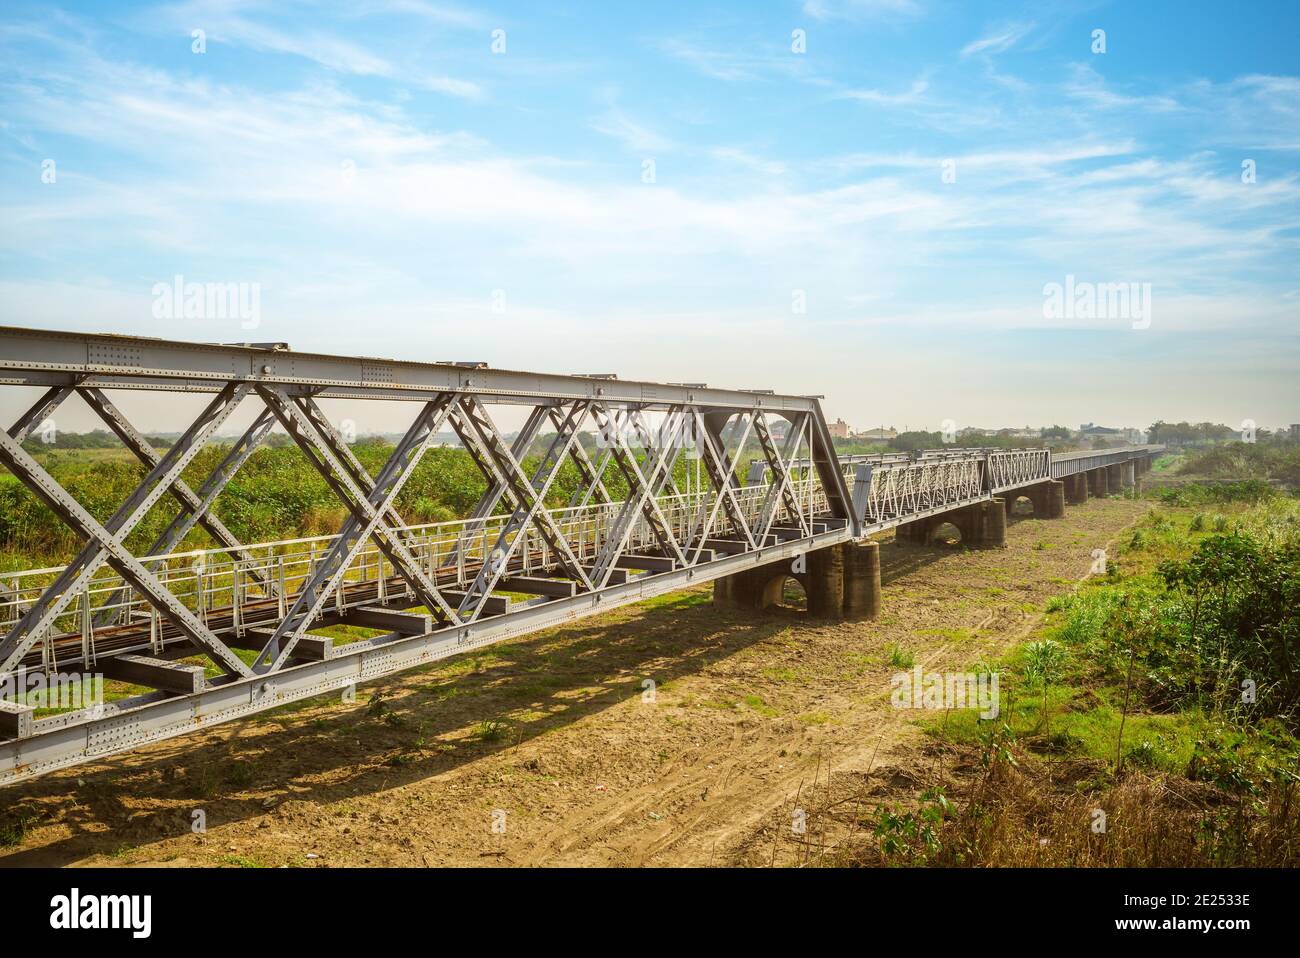 Heritage Steel Bridge at Huwei township, Yunlin county, Taiwan Stock Photo